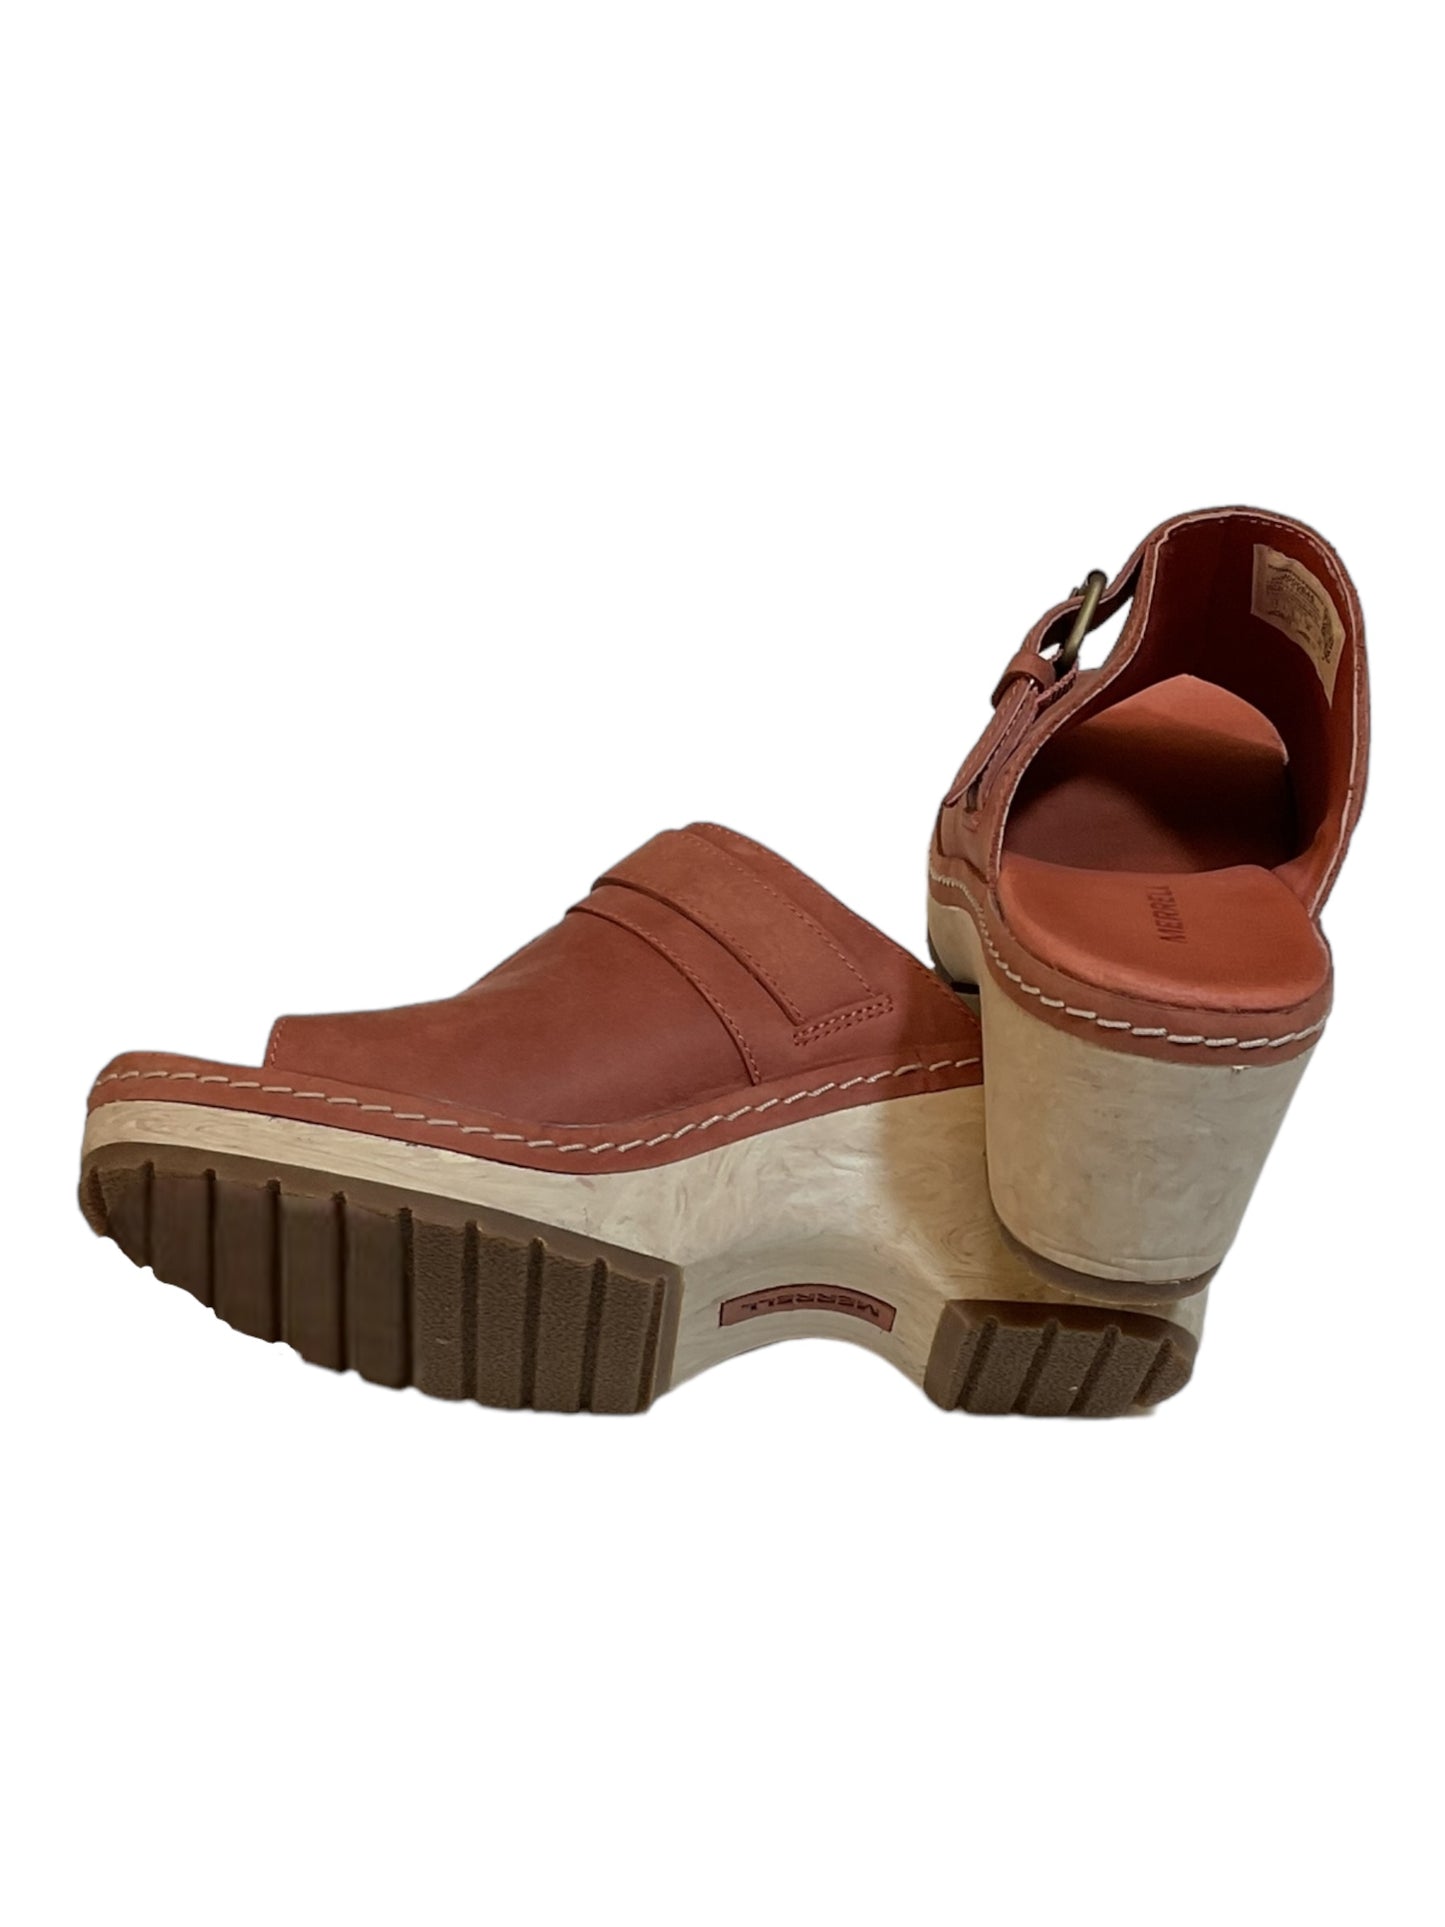 Sandals Heels Block By Merrell  Size: 7.5